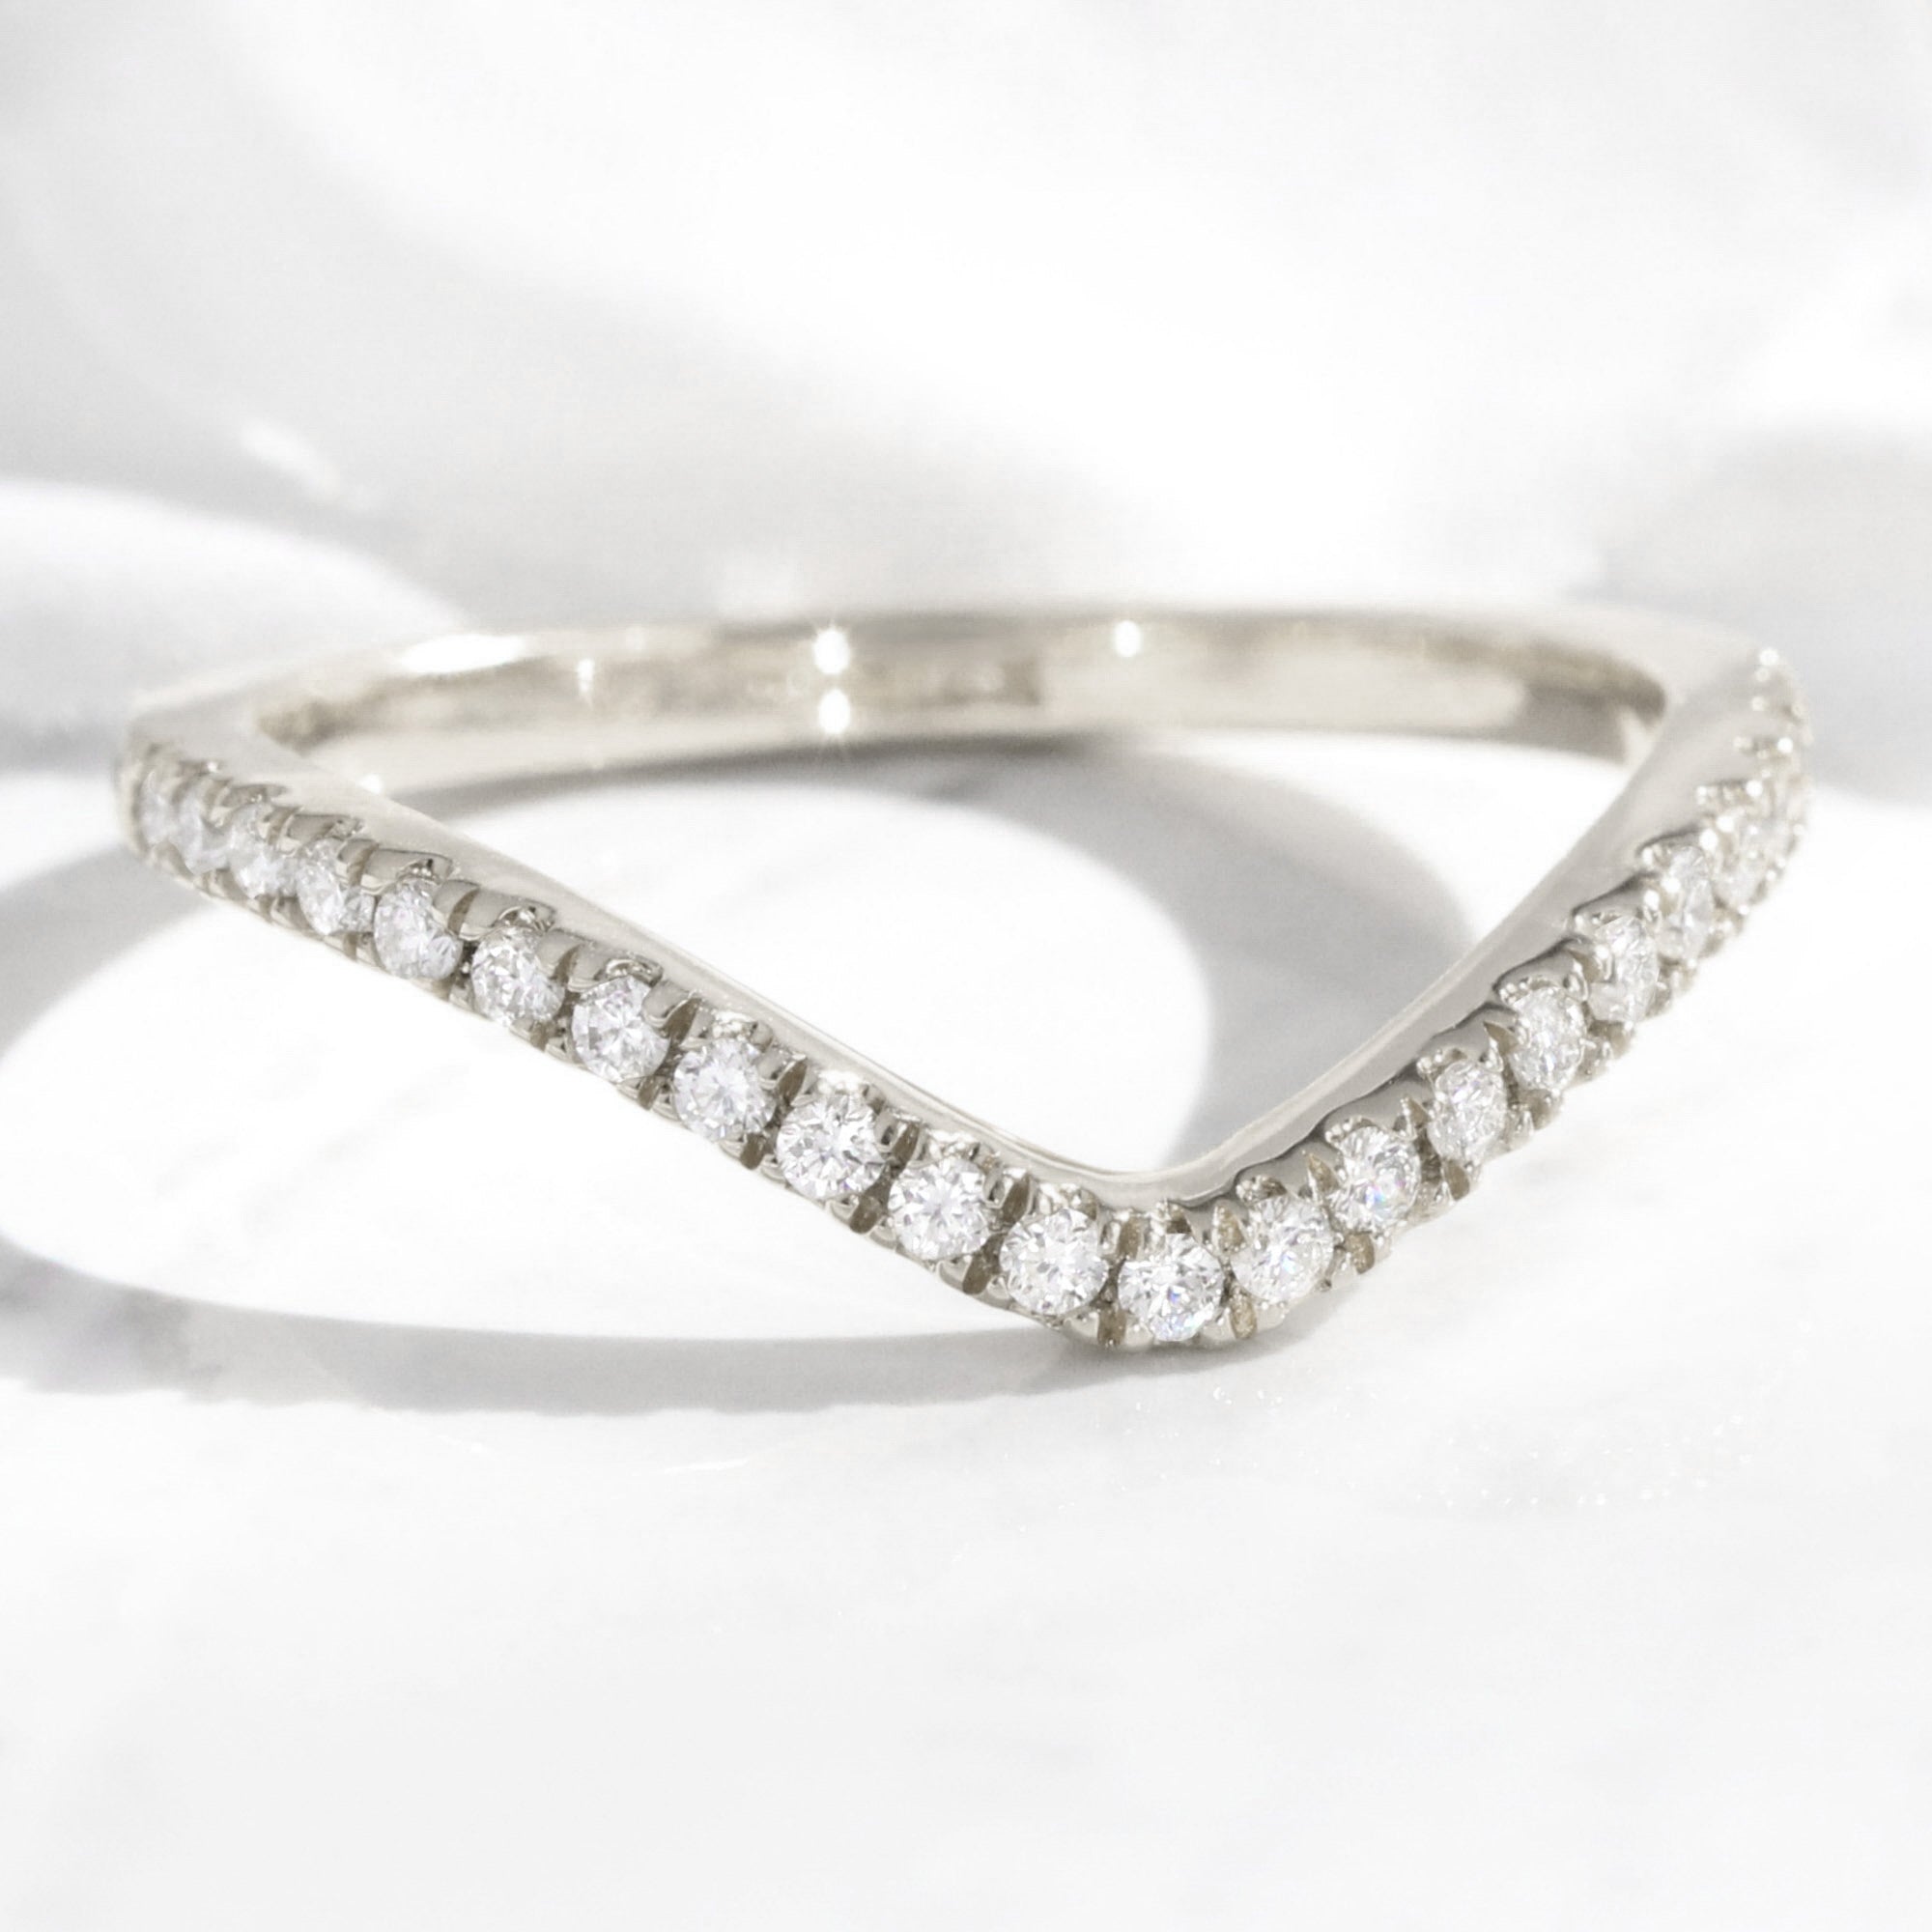 Contour Diamond Wedding Ring white Gold U Shaped Curved Pave Band La More Design Jewelry